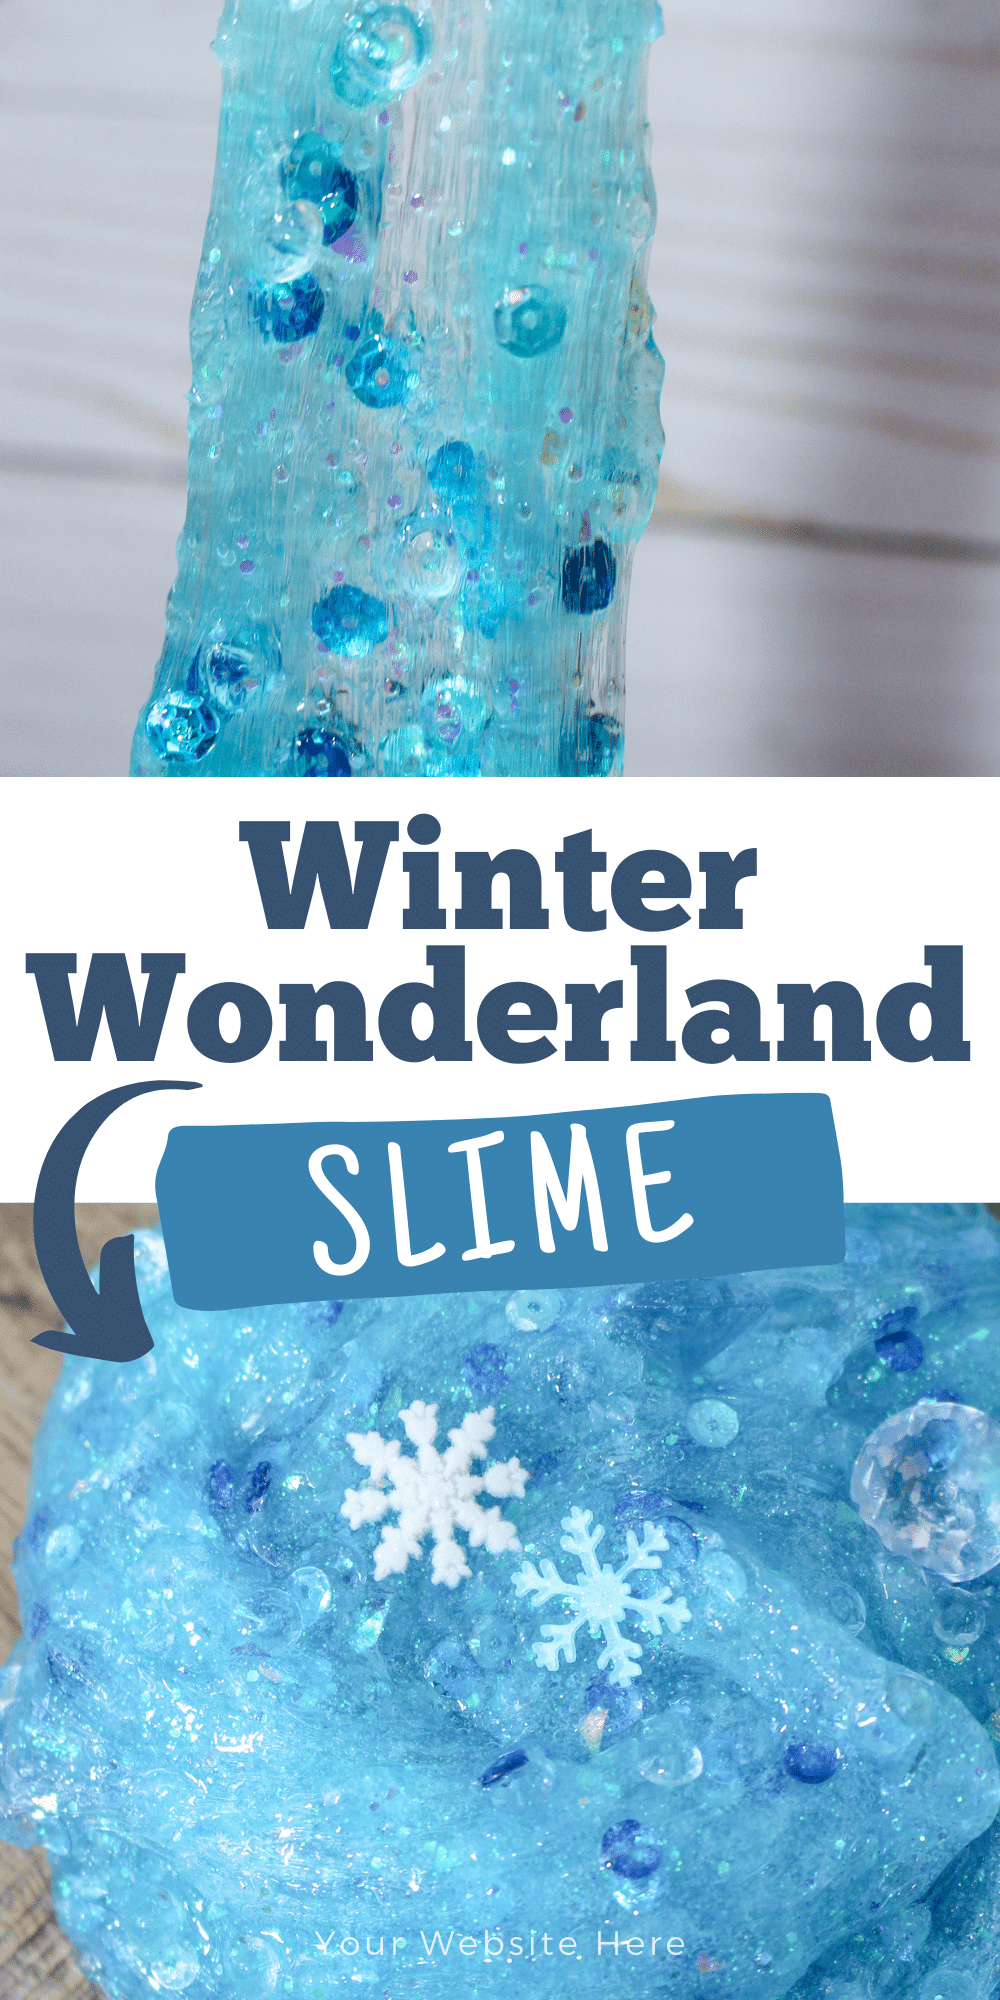 Winter Wonderland Slime Recipe